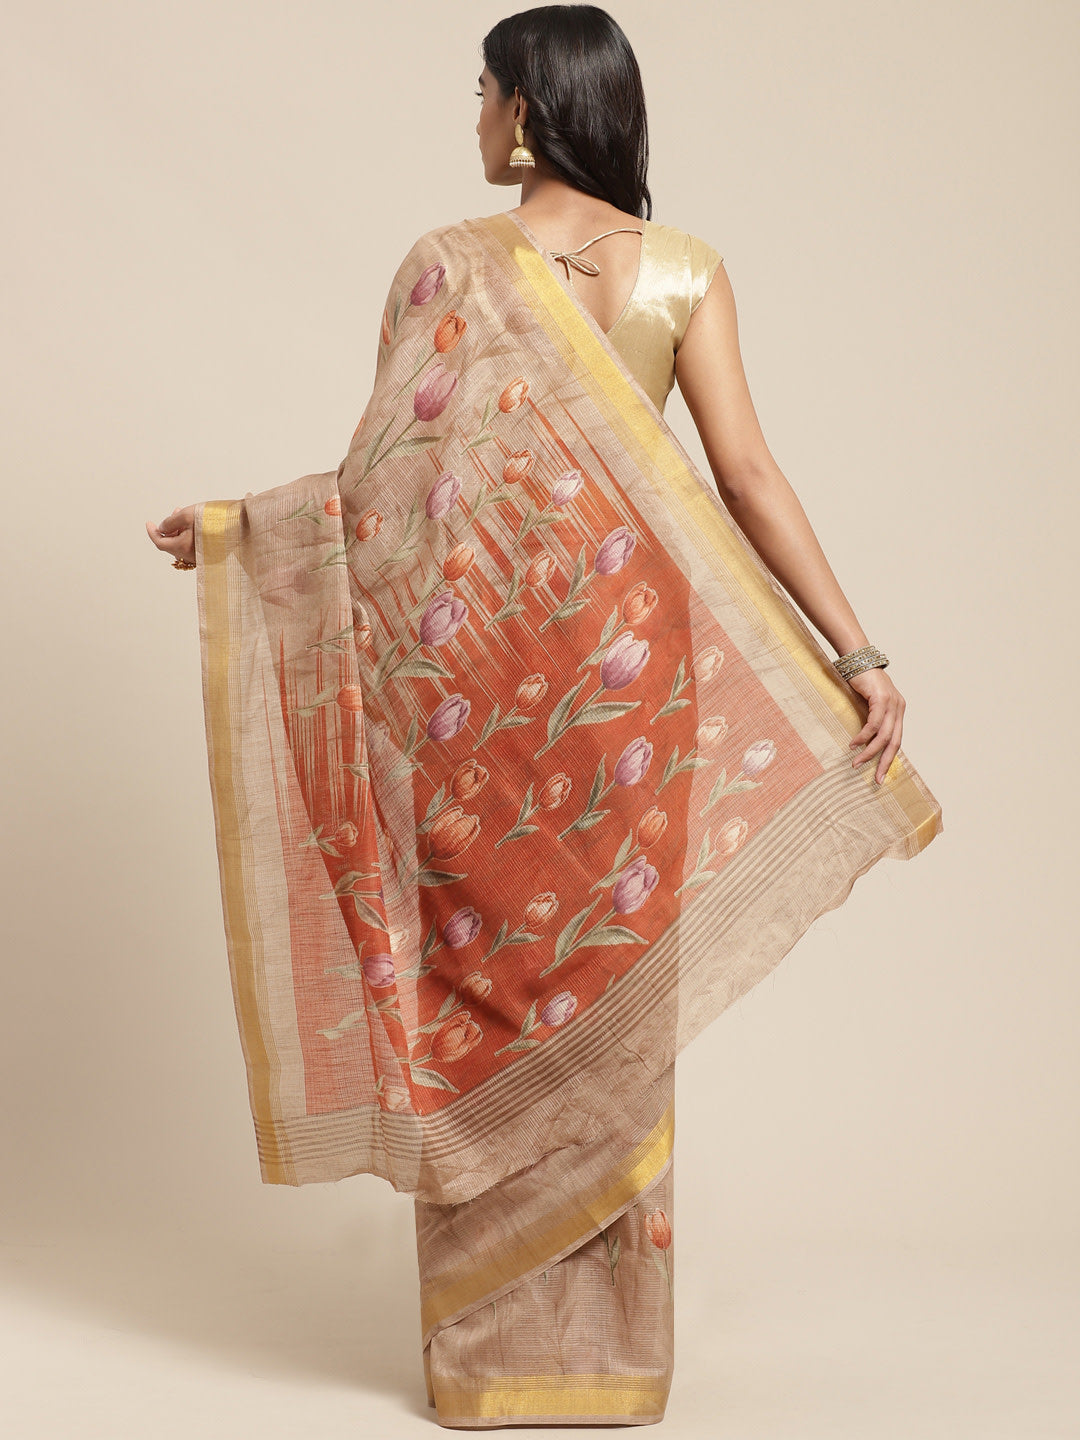 Women's Beige Cotton Blend Printed Saree - Ahika